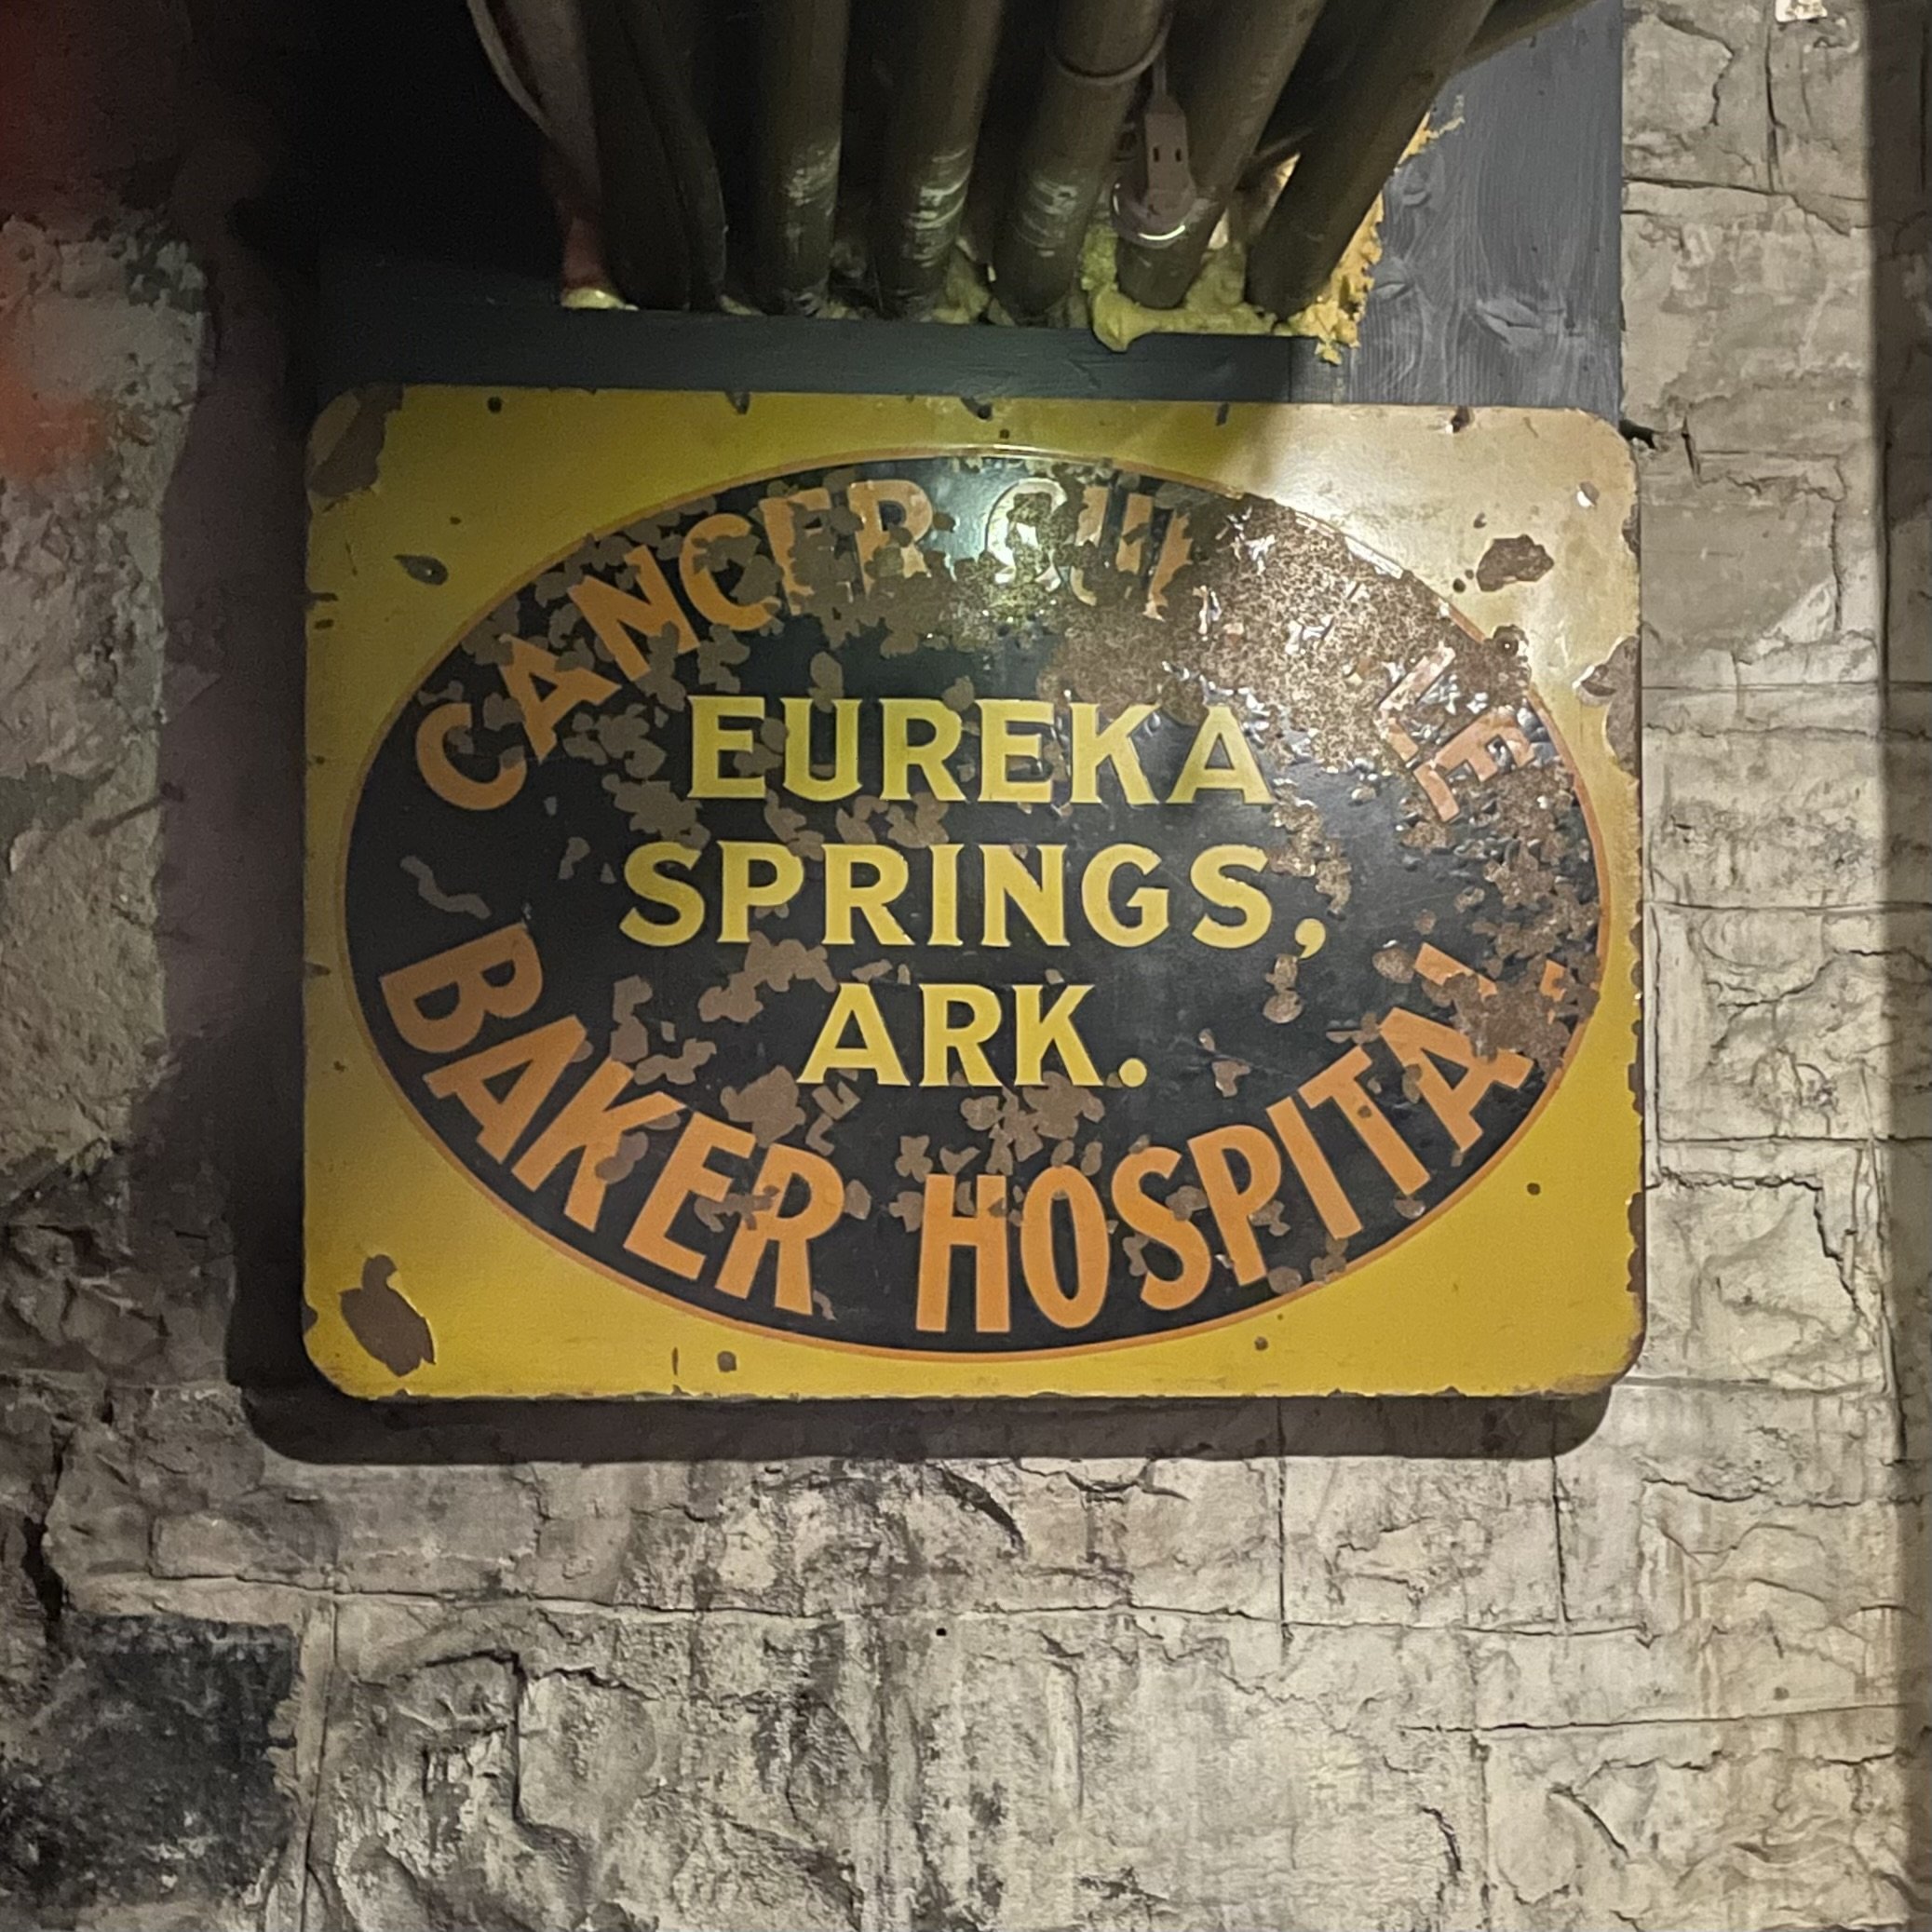 Baker hospital cancer curable eureka springs sign in the crescent hotel morgue.jpg